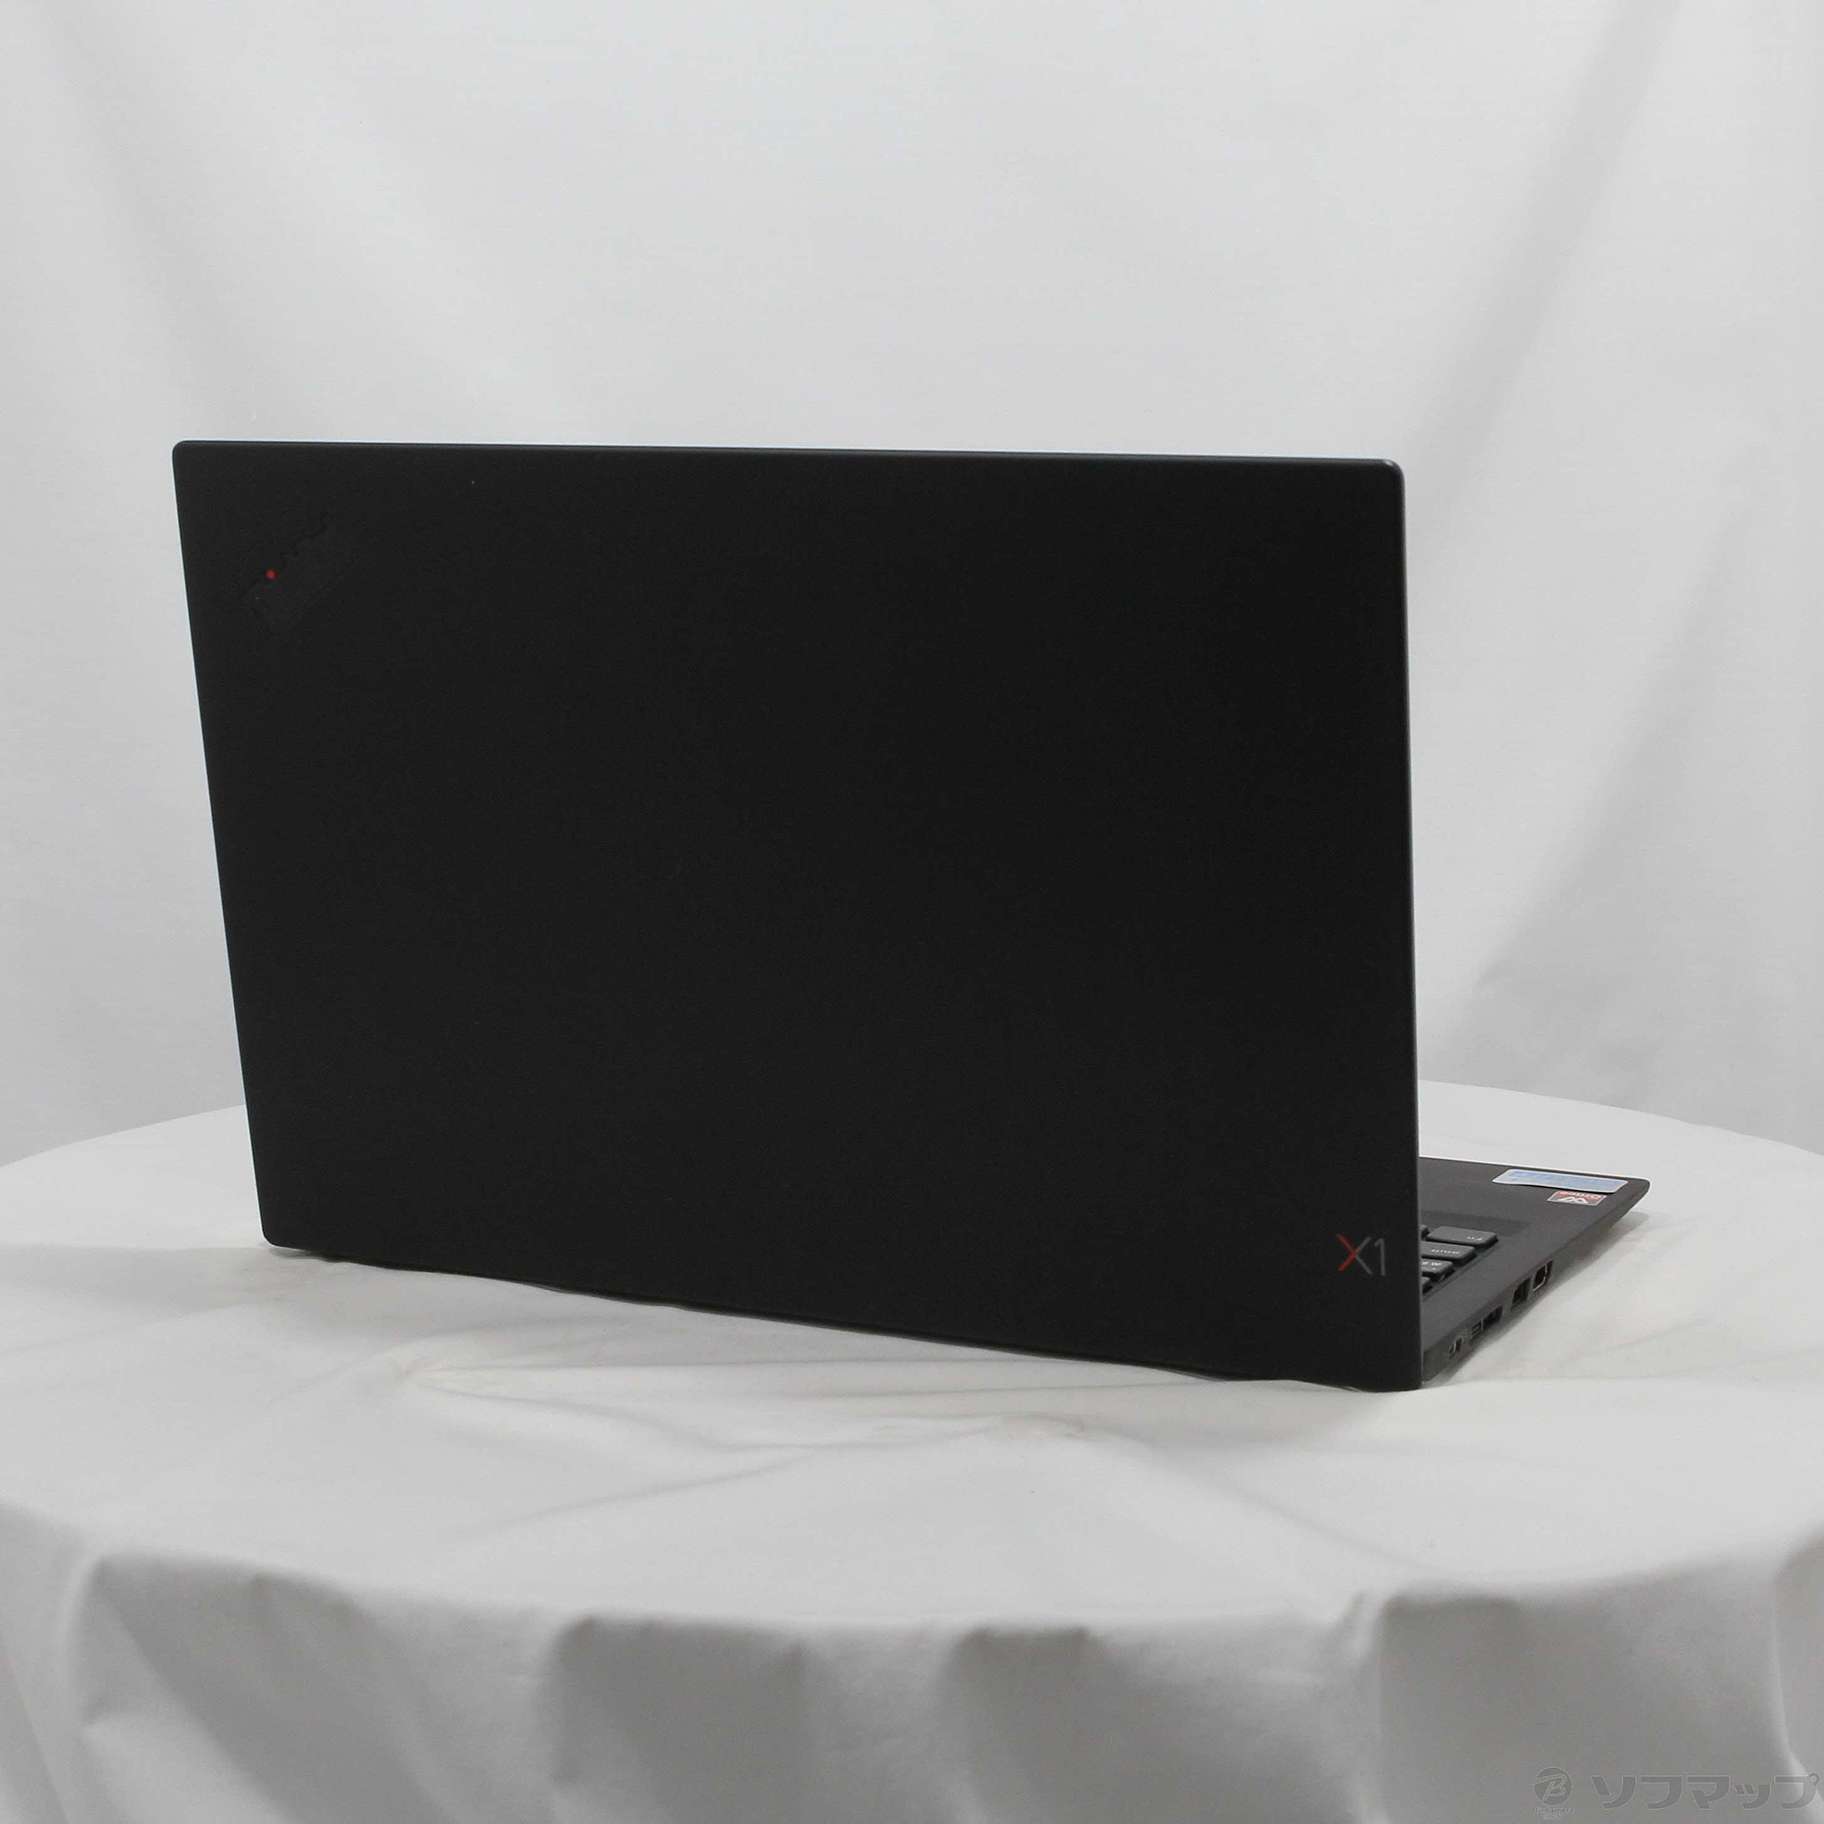 中古】ThinkPad X1 Carbon 20KHCTO1WW 〔Windows 10〕 [2133044624524